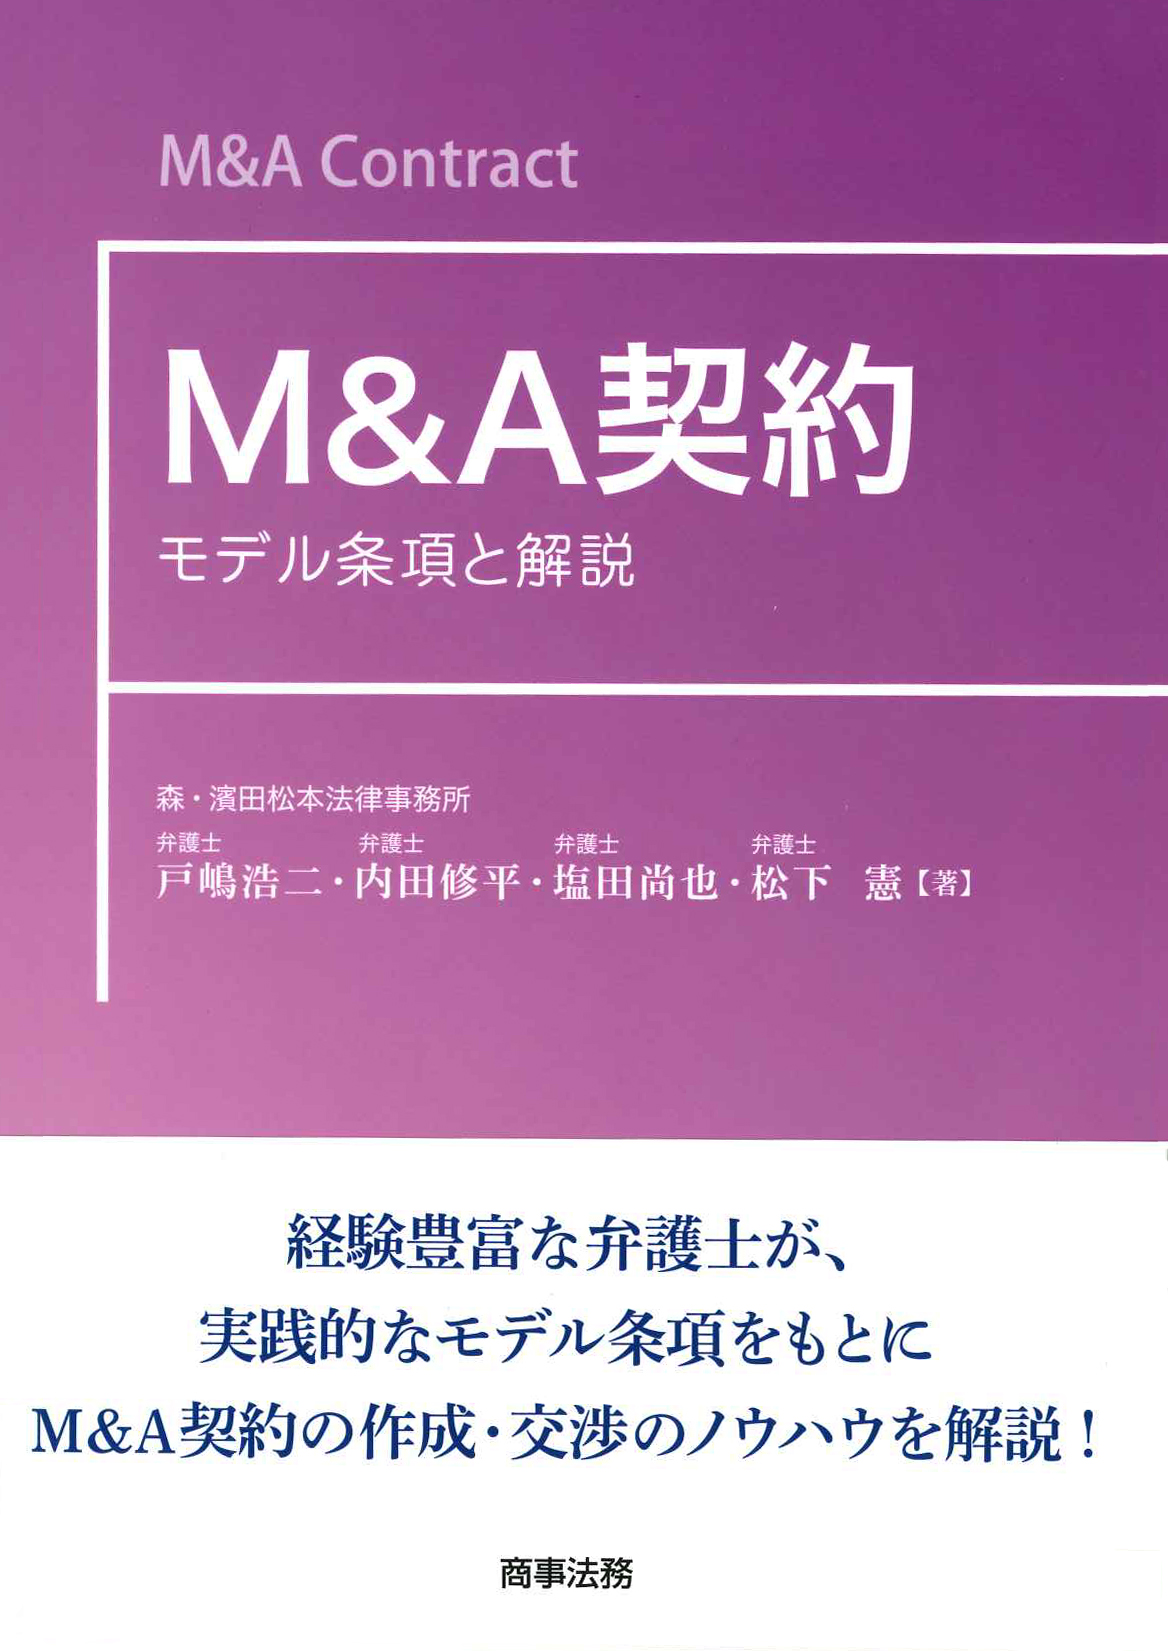 『M&A契約 - モデル条項と解説 -』